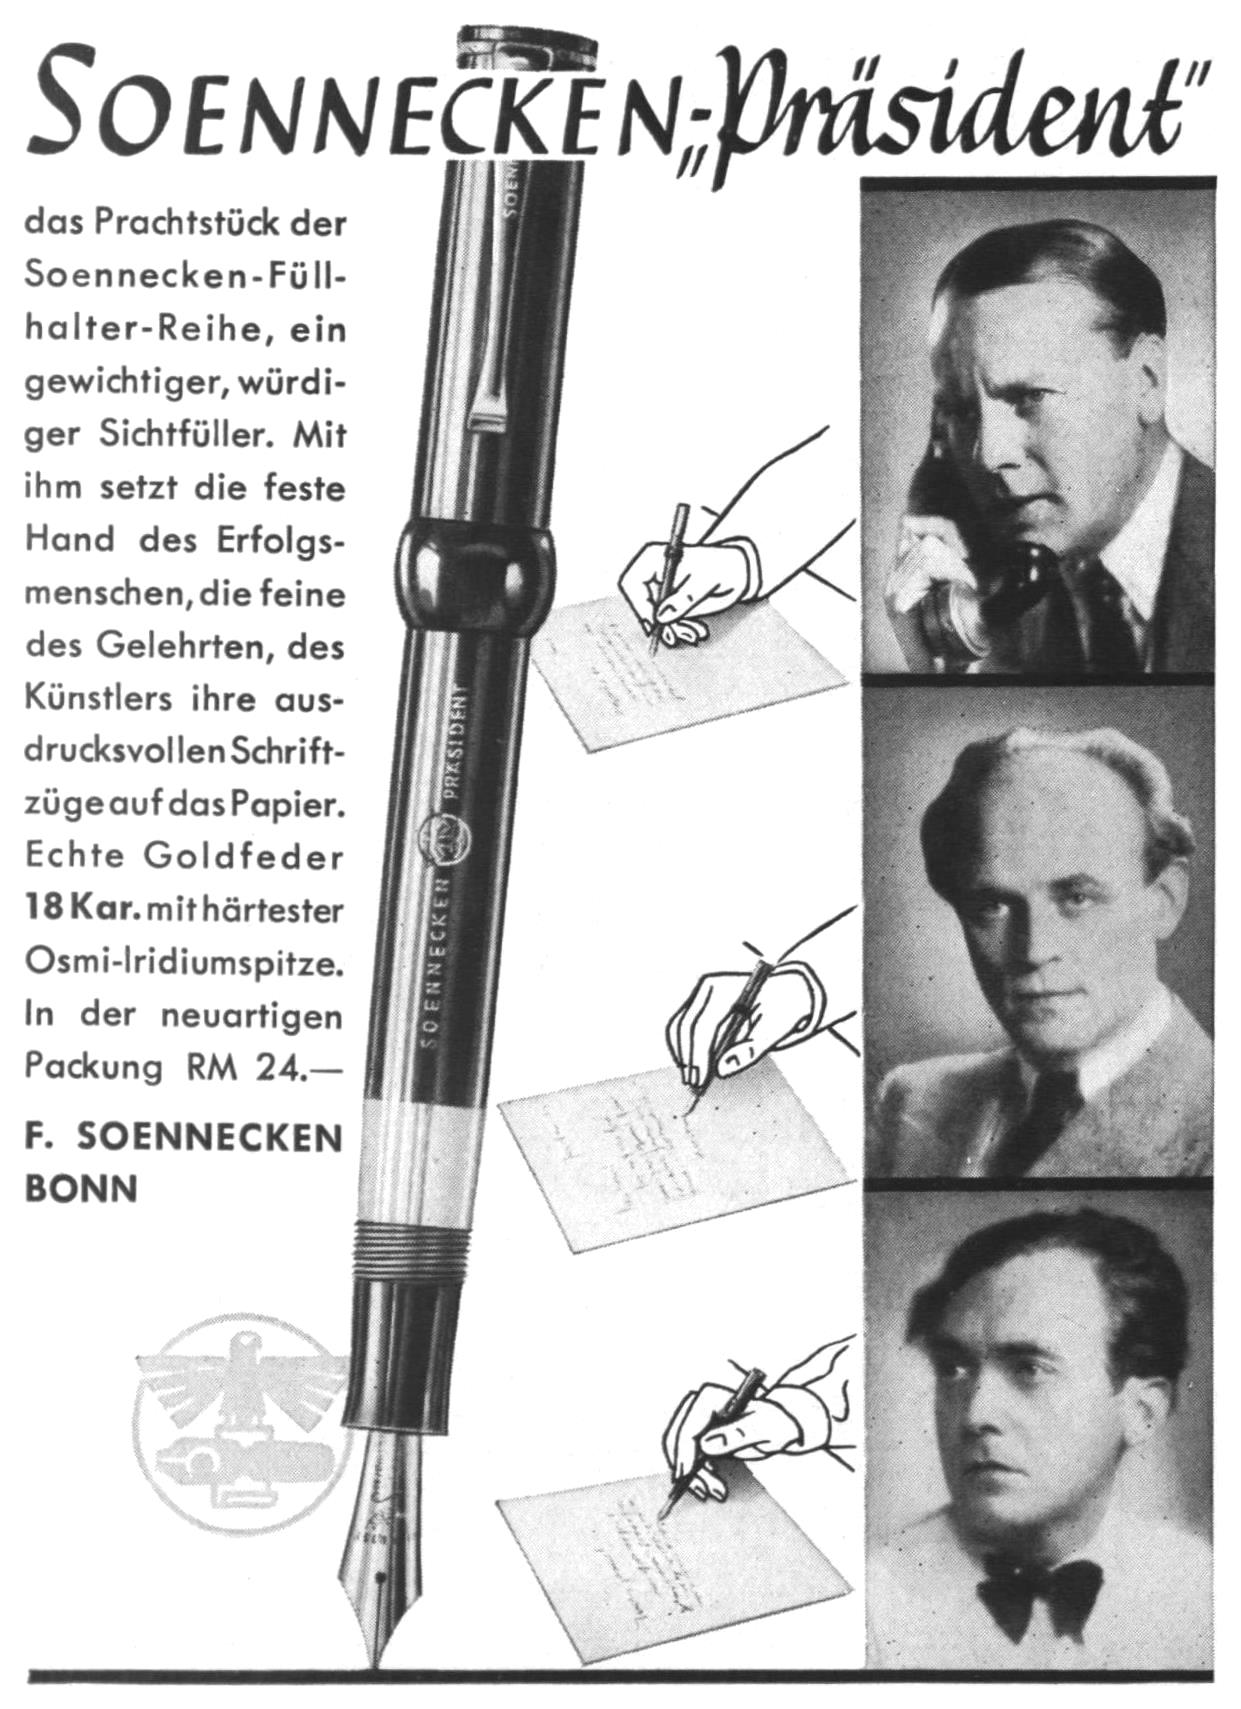 Soennecken 1935 0.jpg